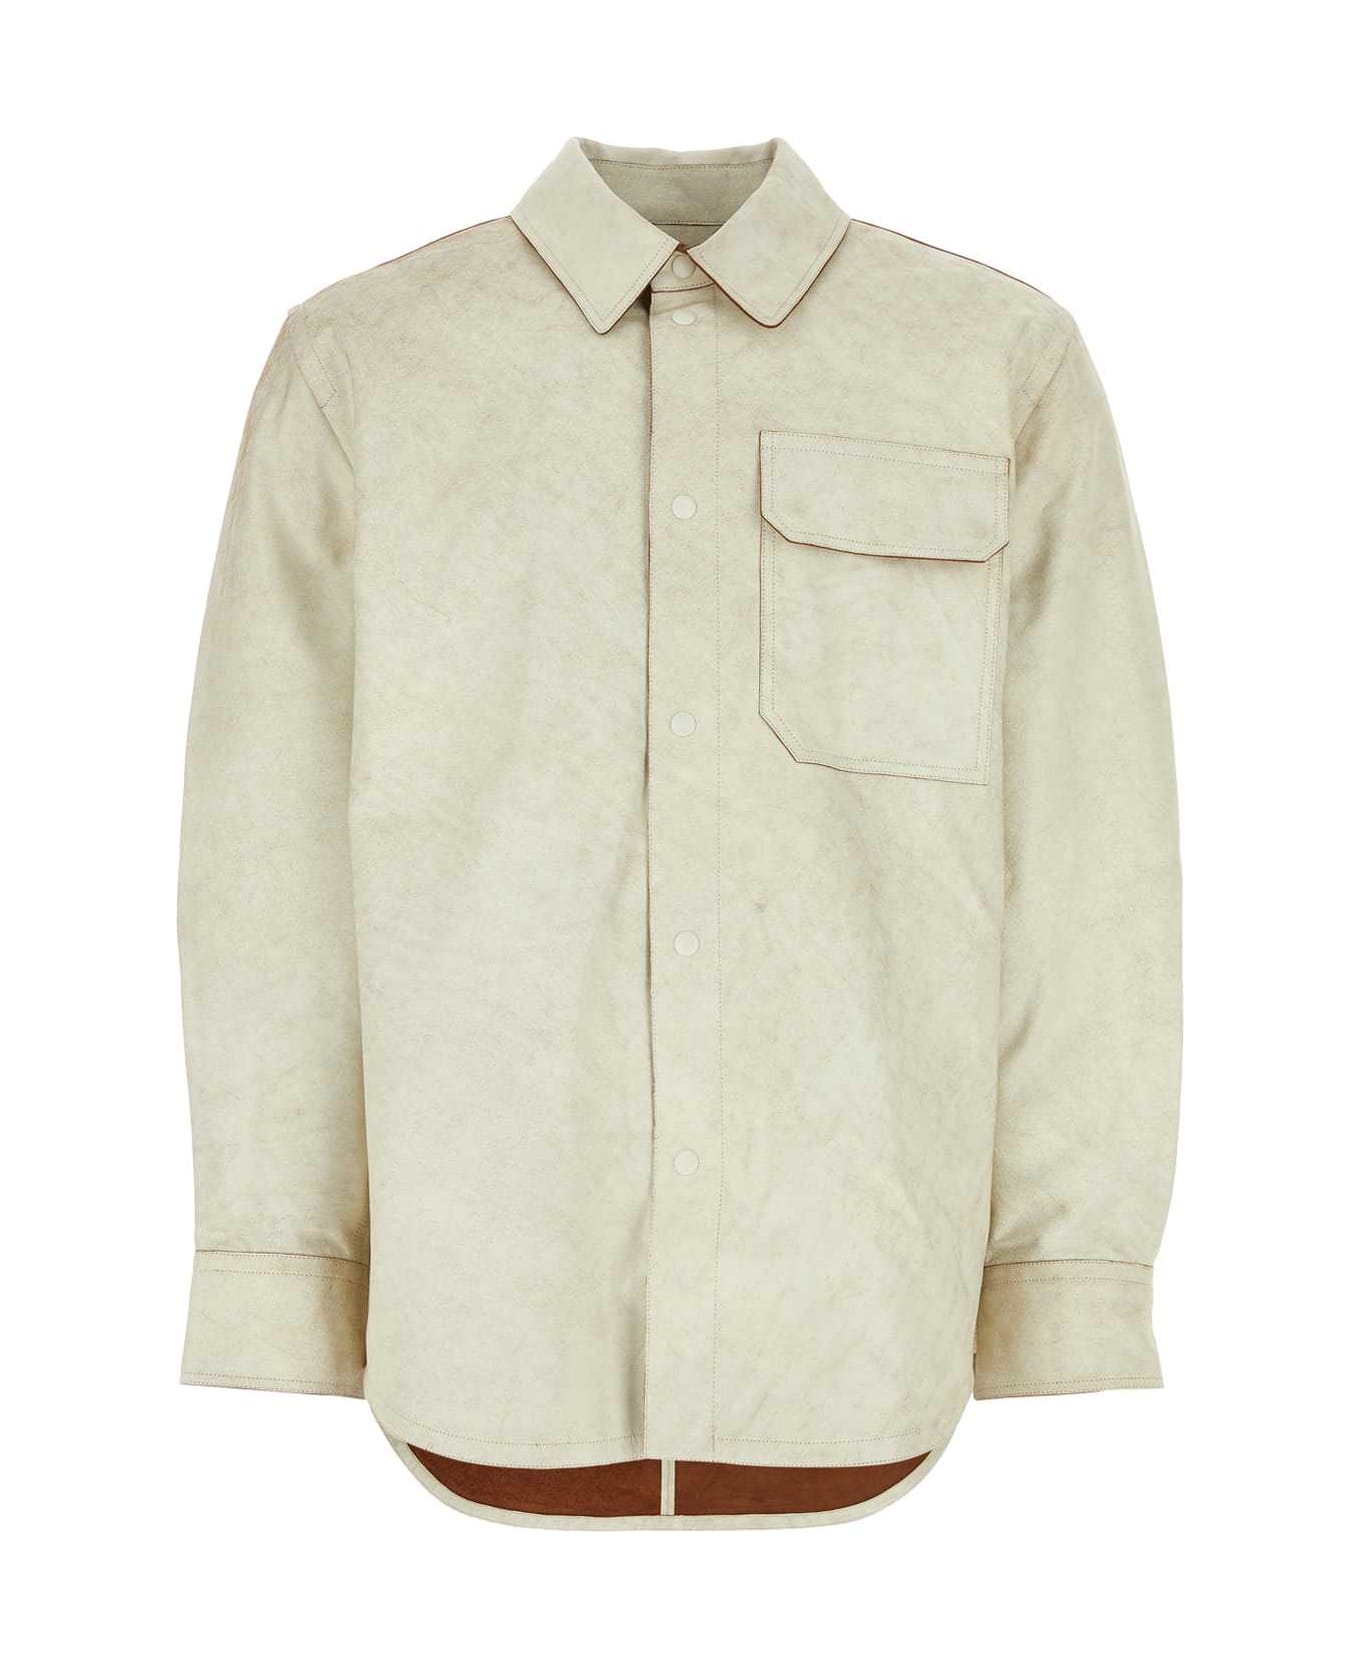 Helmut Lang Chalk Leather Shirt - White